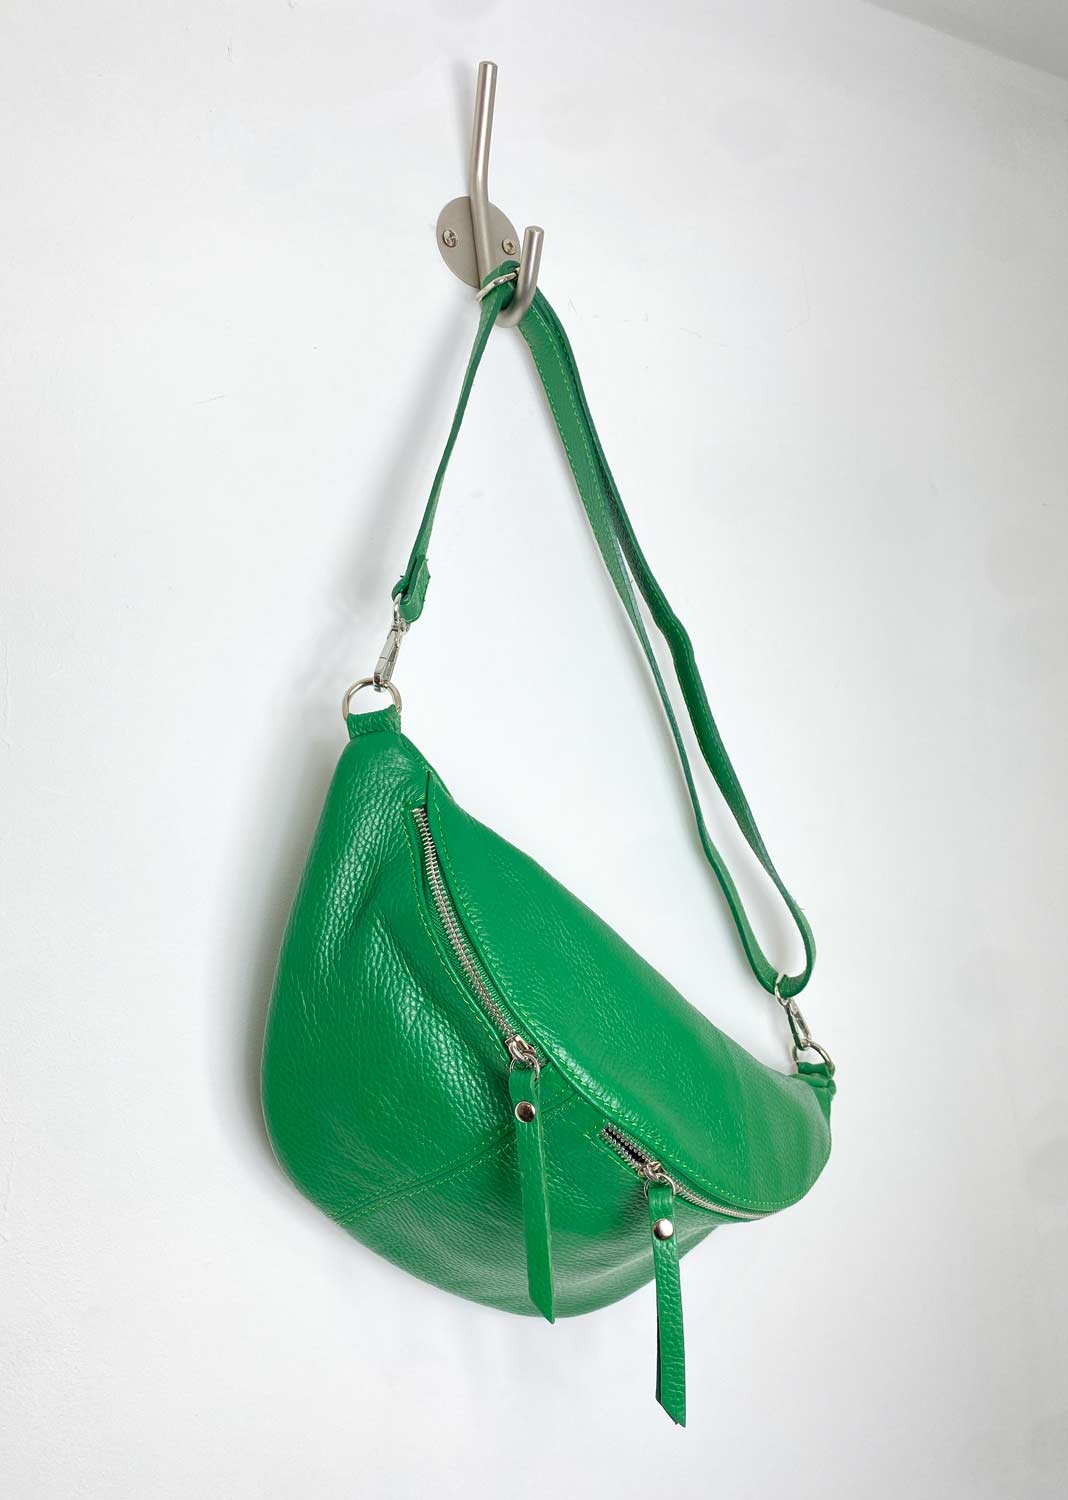 Green Leather Sling Bag